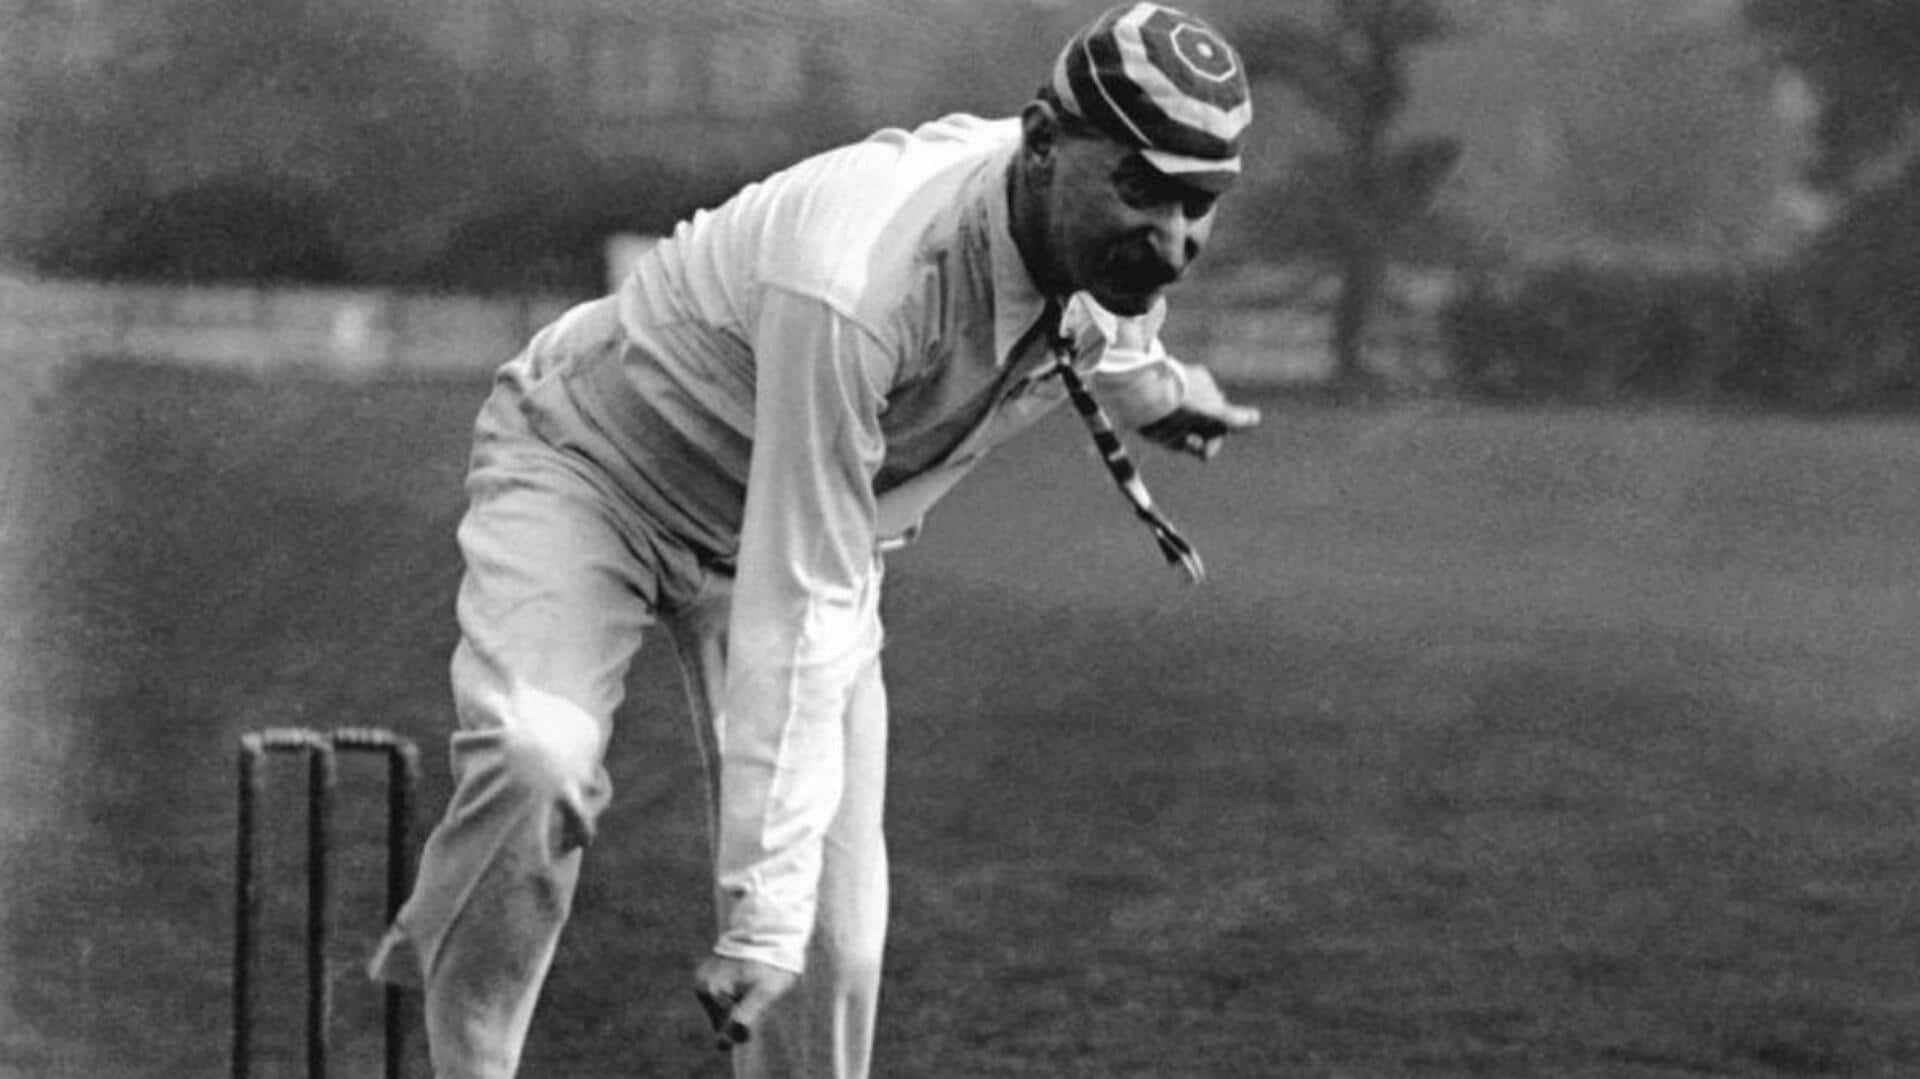 First Hat trick: ప్రపంచ క్రికెట్‌లో తొలి హ్యాట్రిక్ నమోదైంది ఈరోజే.. ఆ బౌలర్ ఎవరంటే?